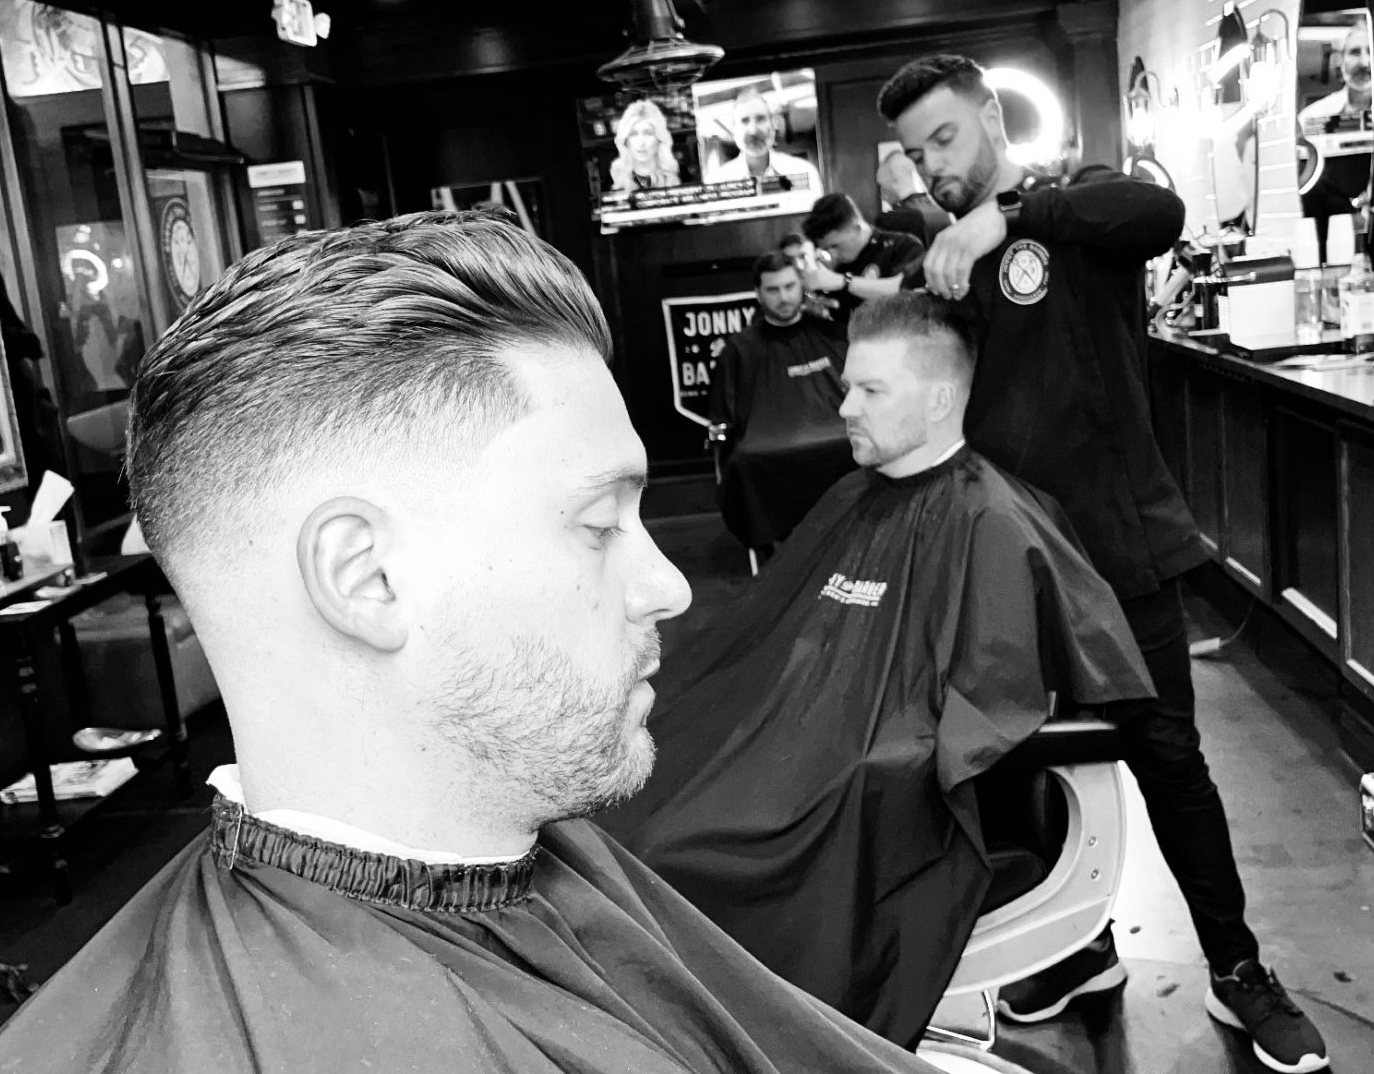 Jonny cutting hair in our barbershop in Buffalo, NY